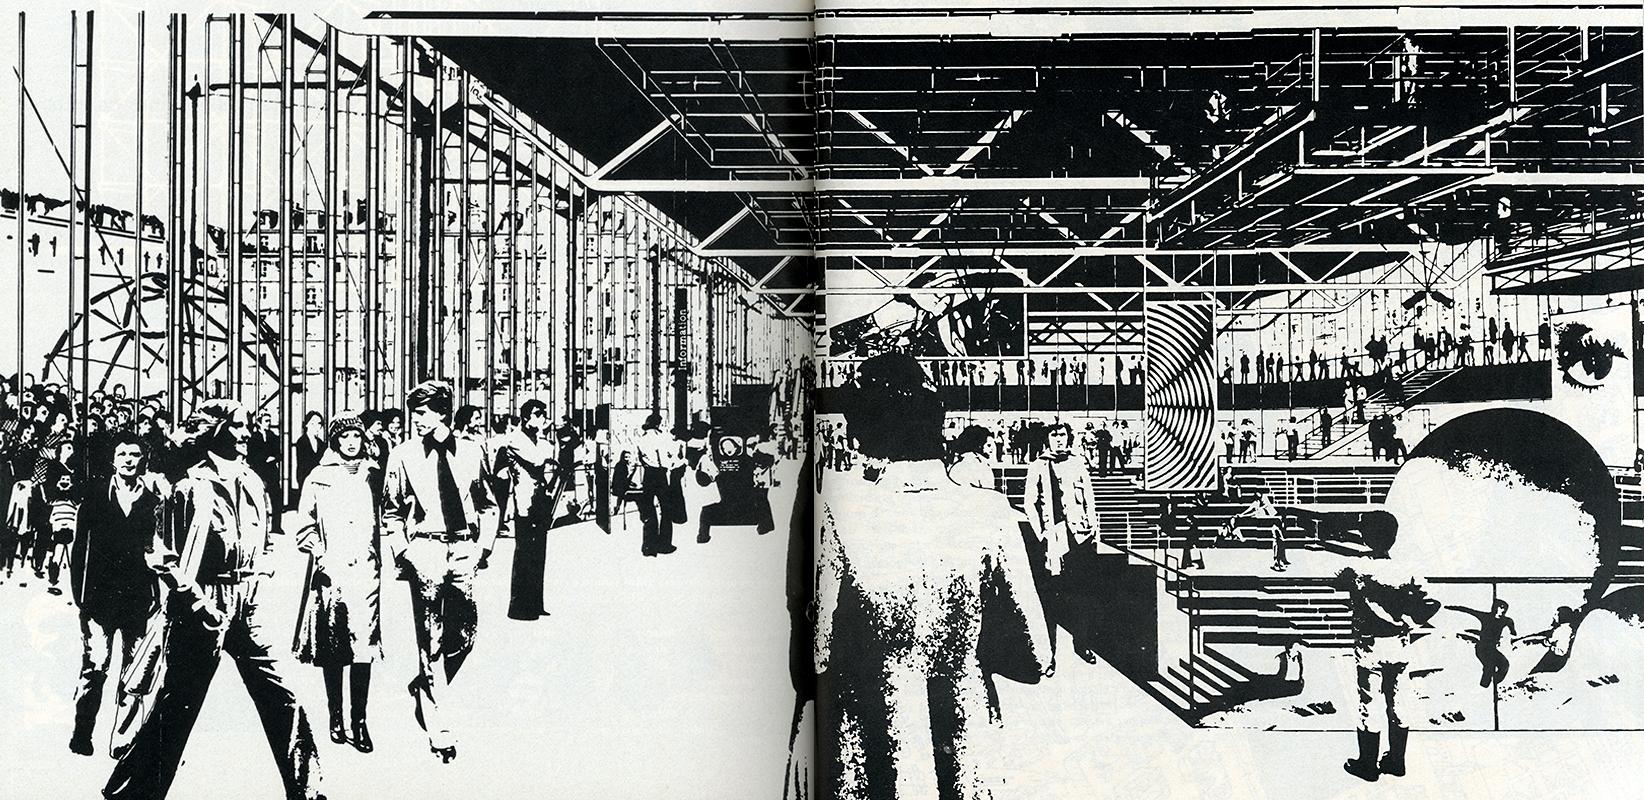 Richard Rogers and Renzo Piano. Auca. 33 1977, 18